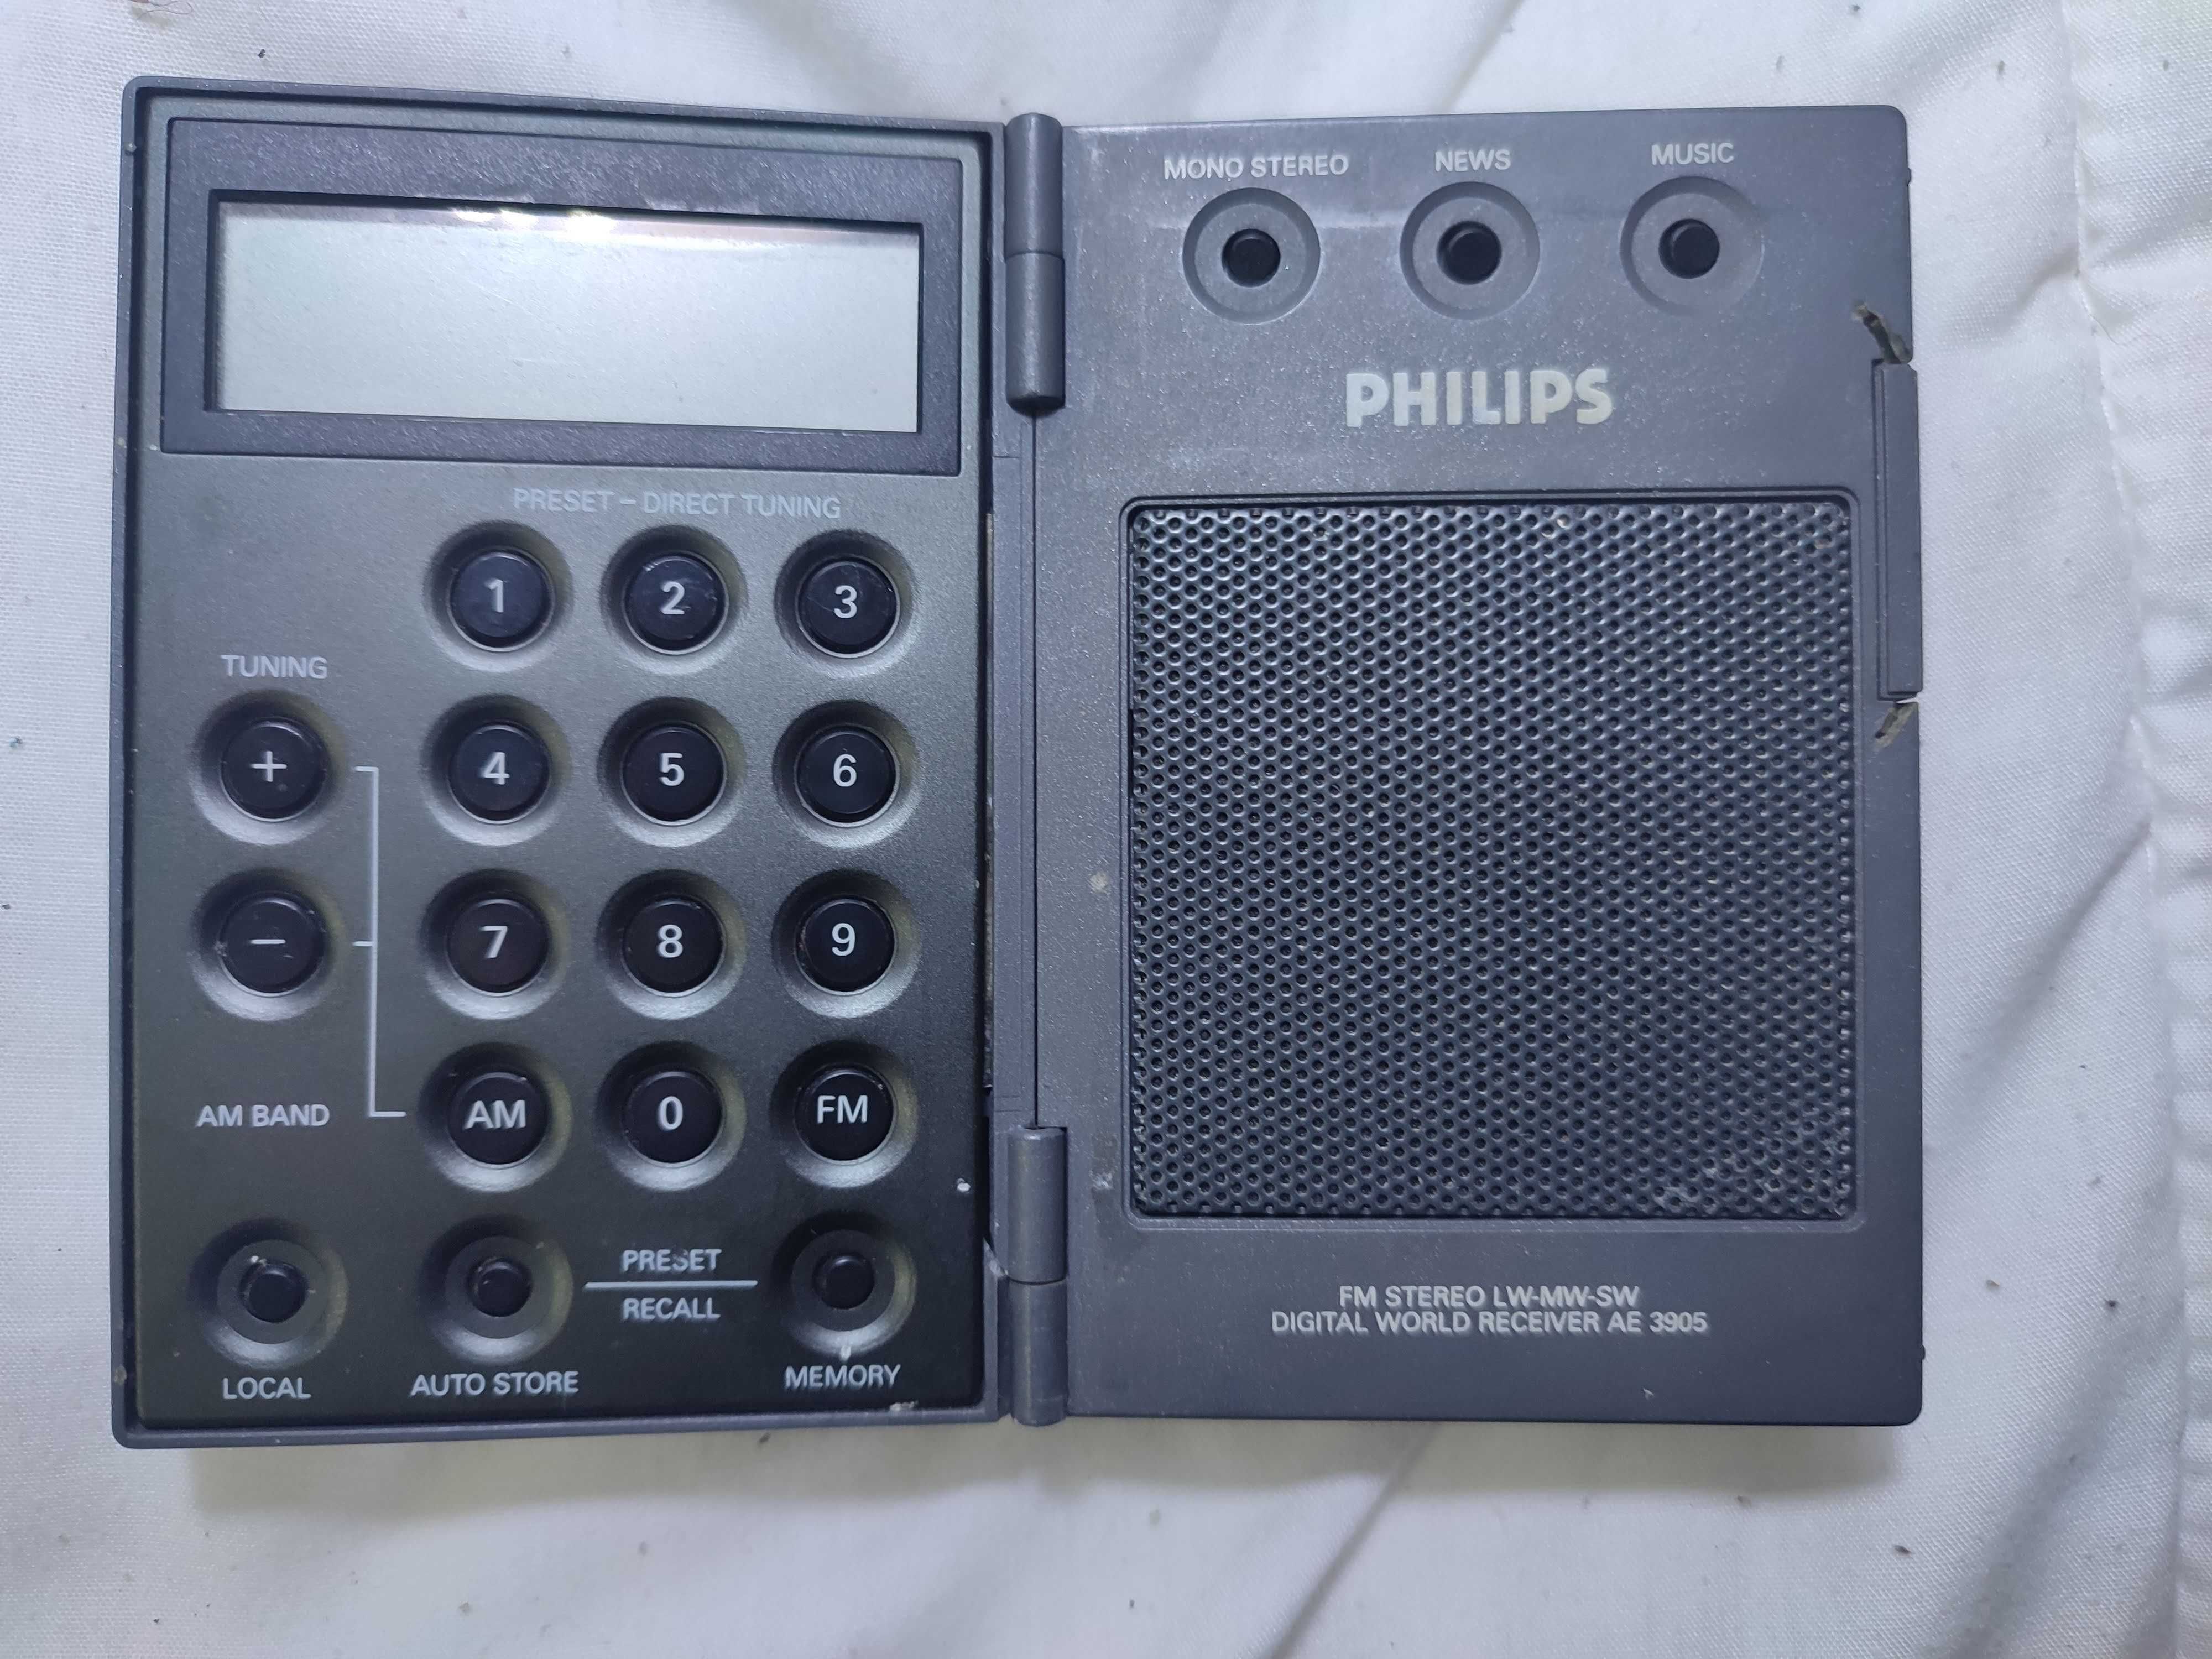 Radio vintage raro da Philips AE 3905